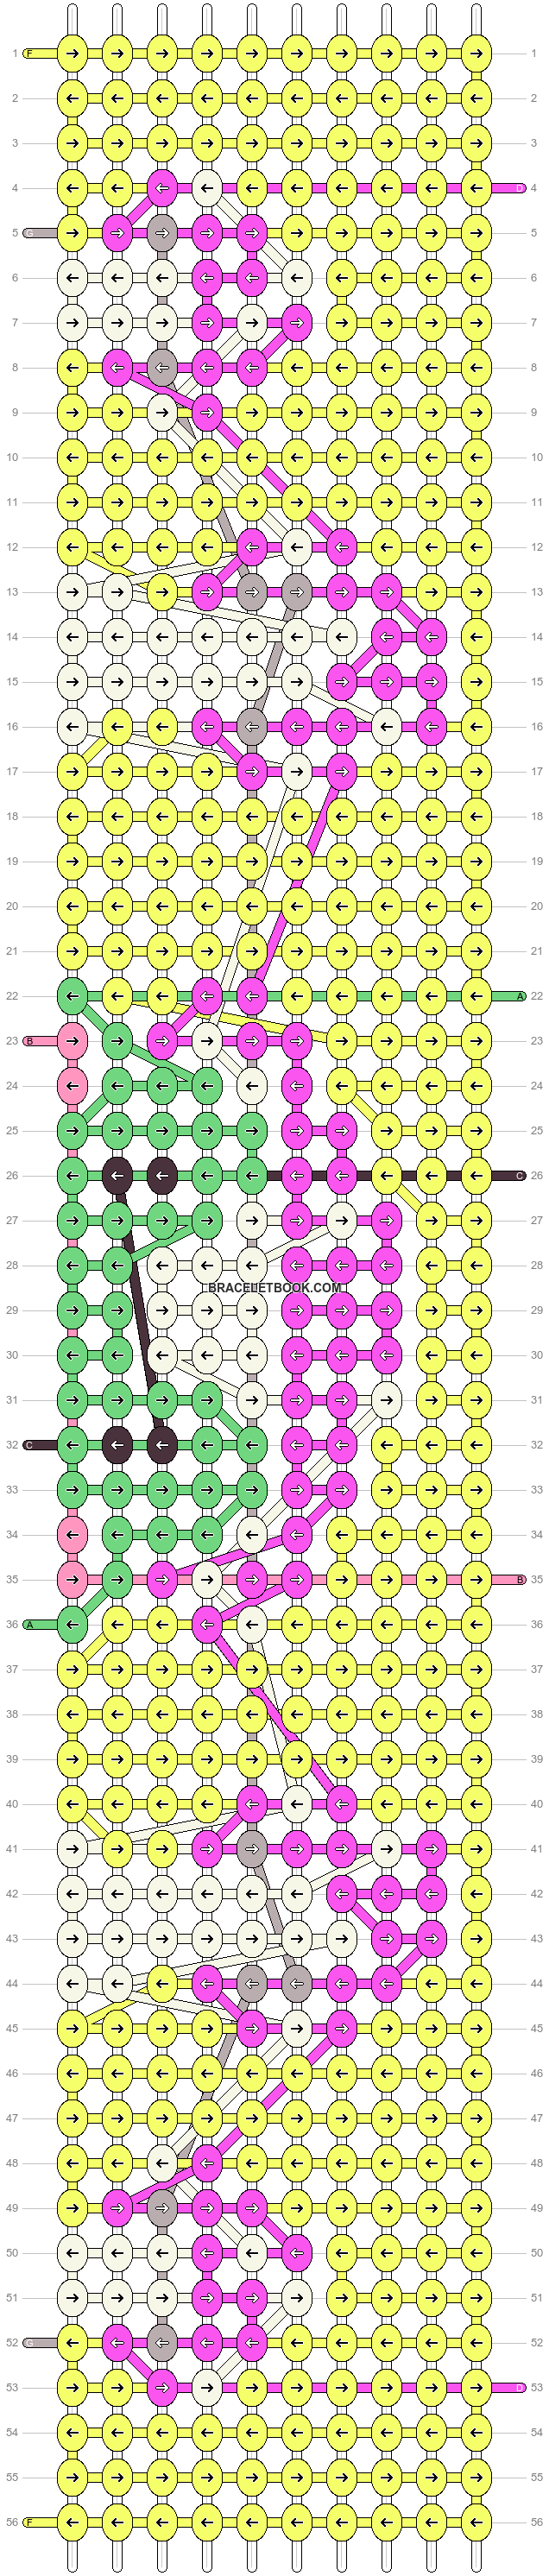 Alpha pattern #91605 variation #187298 pattern